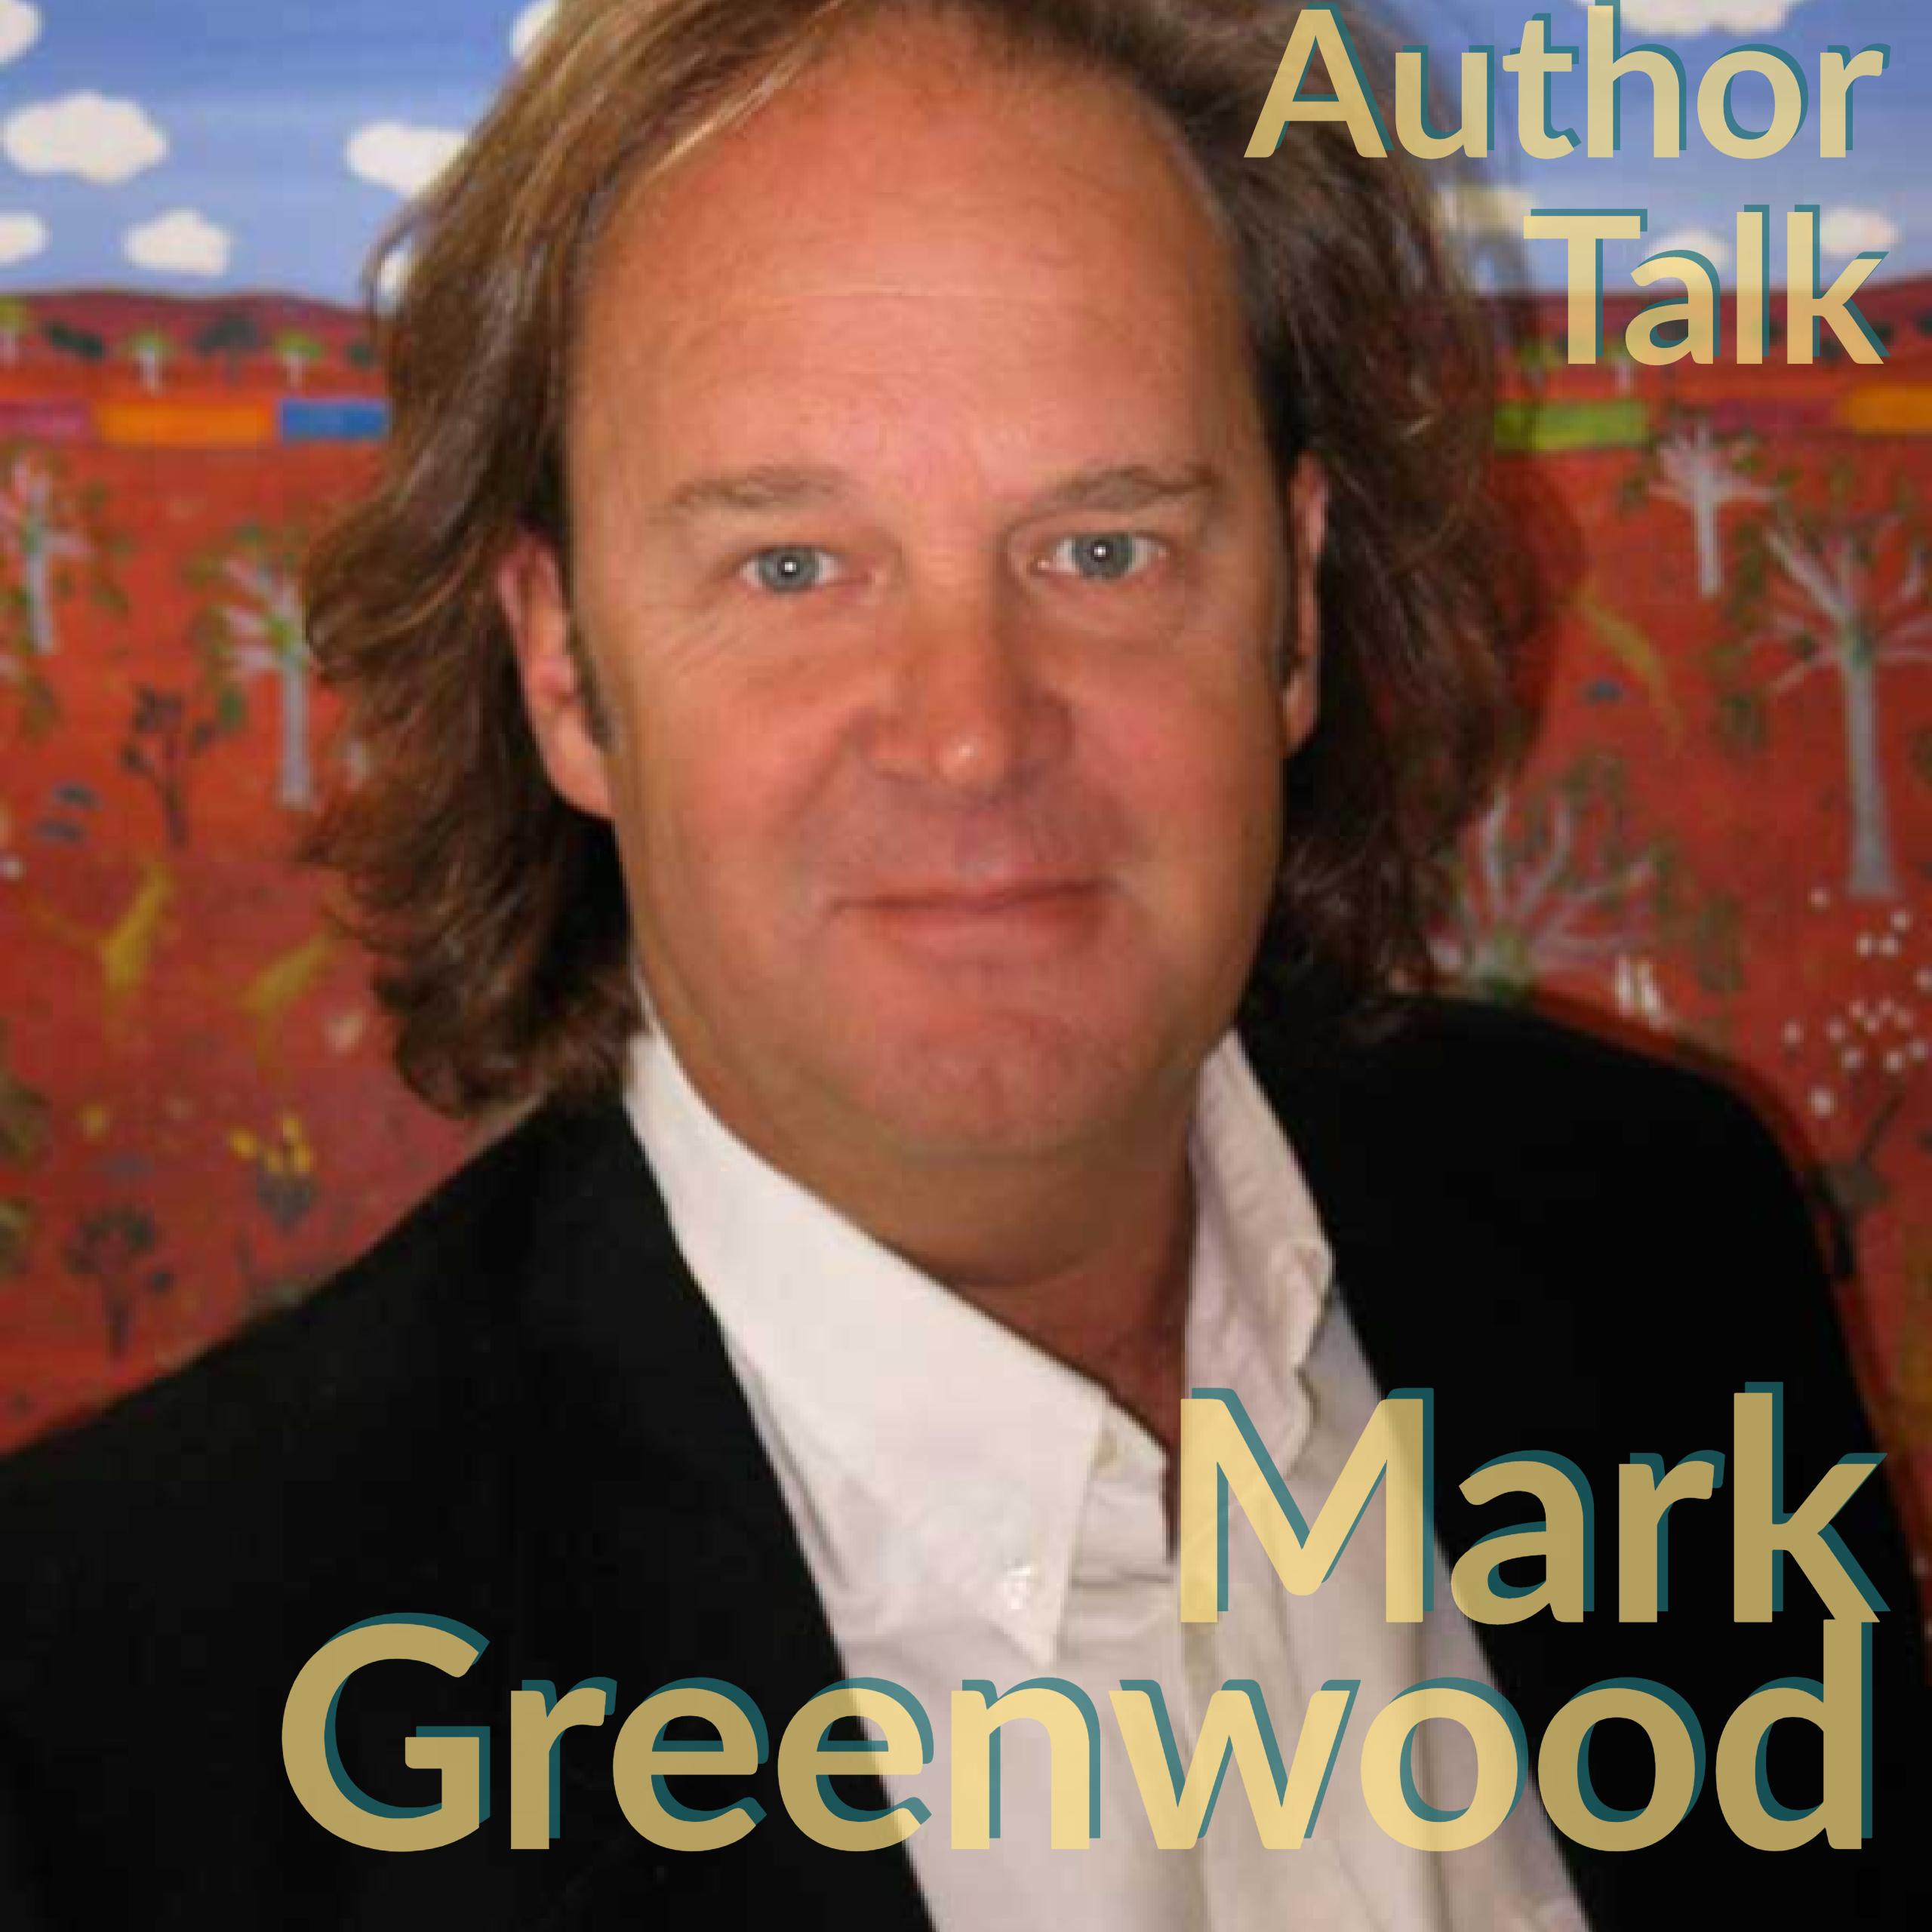 Mark Greenwood Author Talk